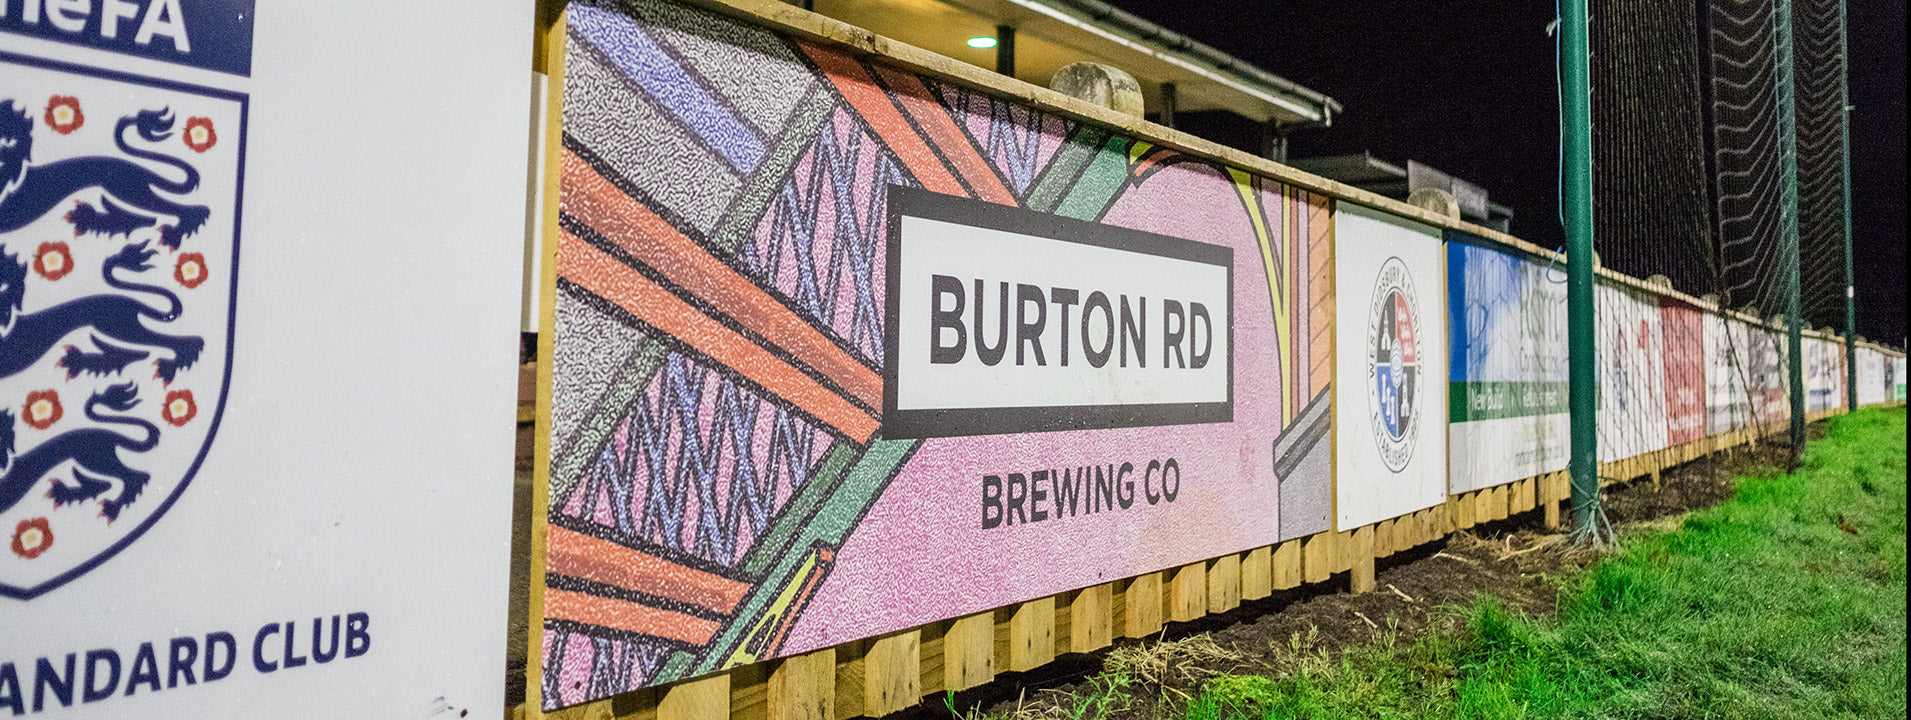 Burton Road Brewing Co. - Shipping Info